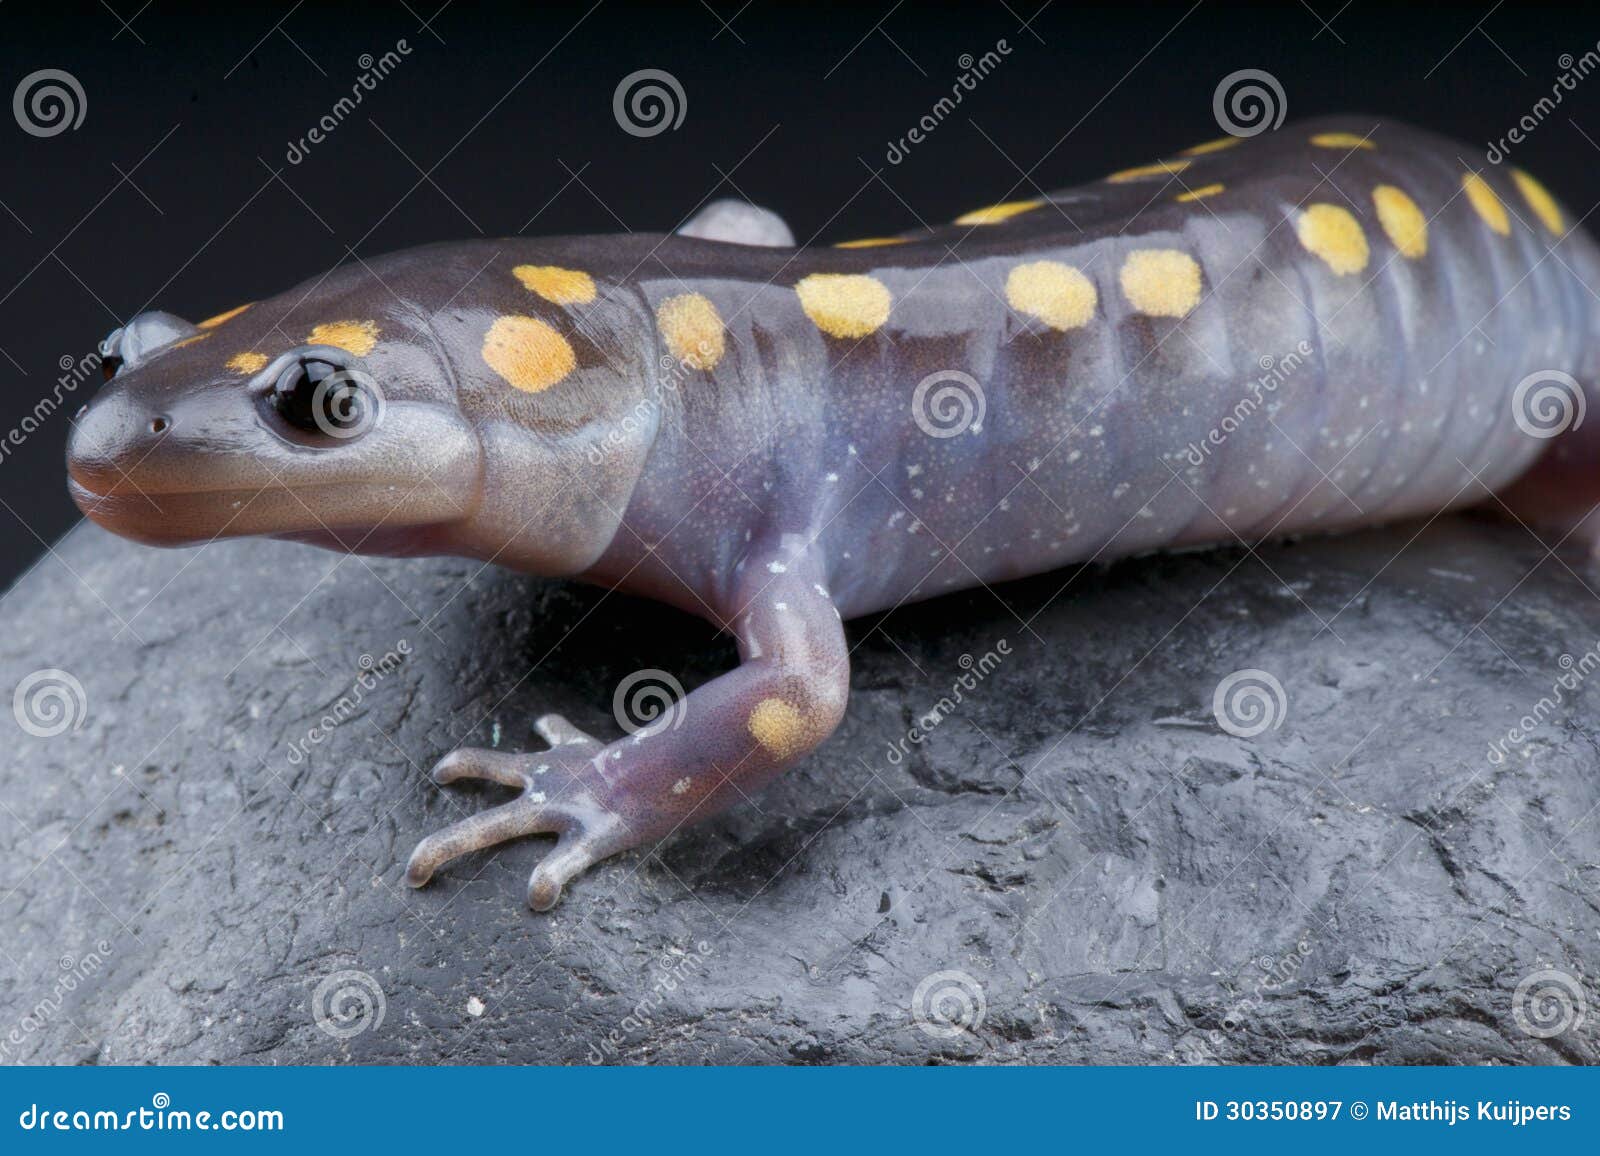 mole salamander / ambystoma maculatum